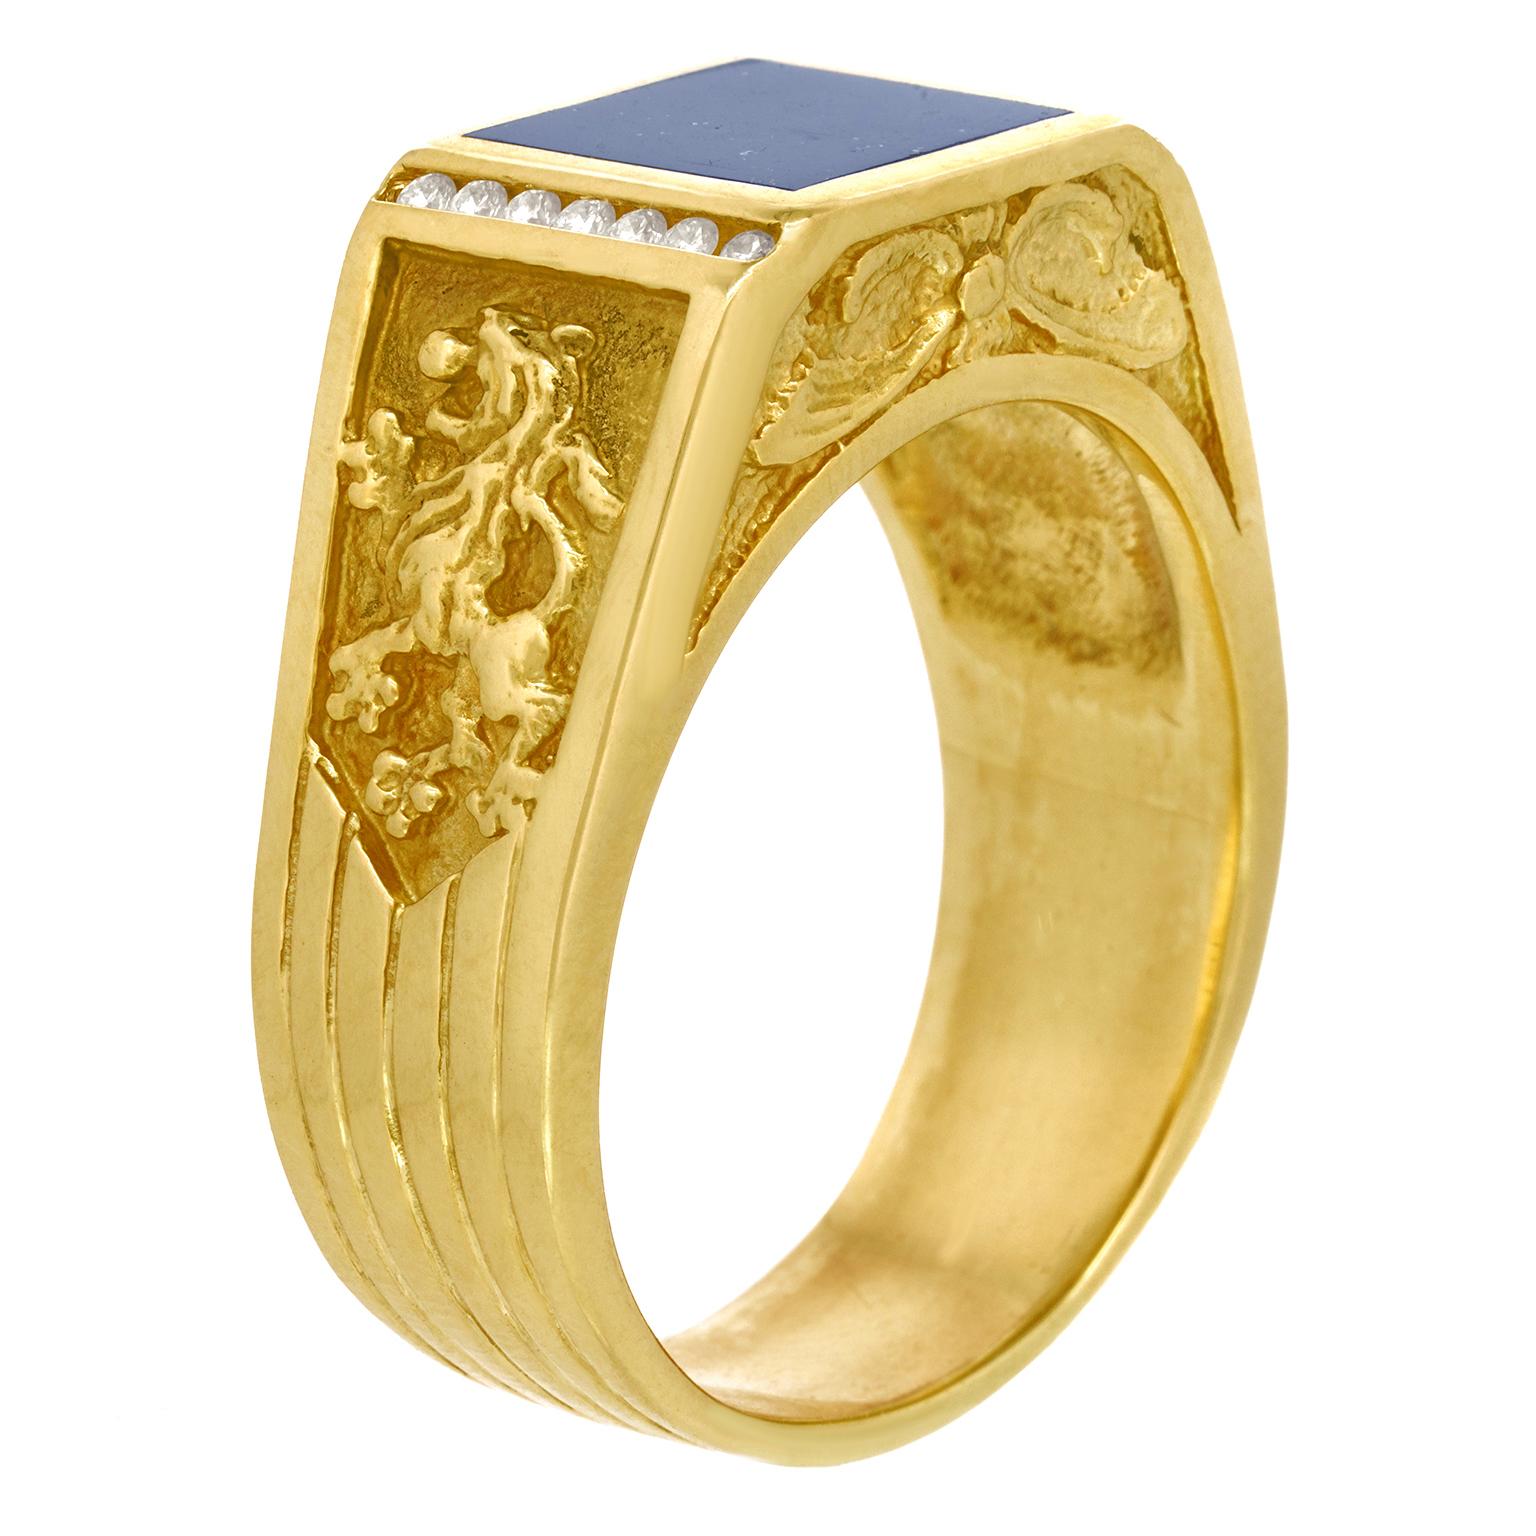 Massive Renaissance Revival Gold Ring 5